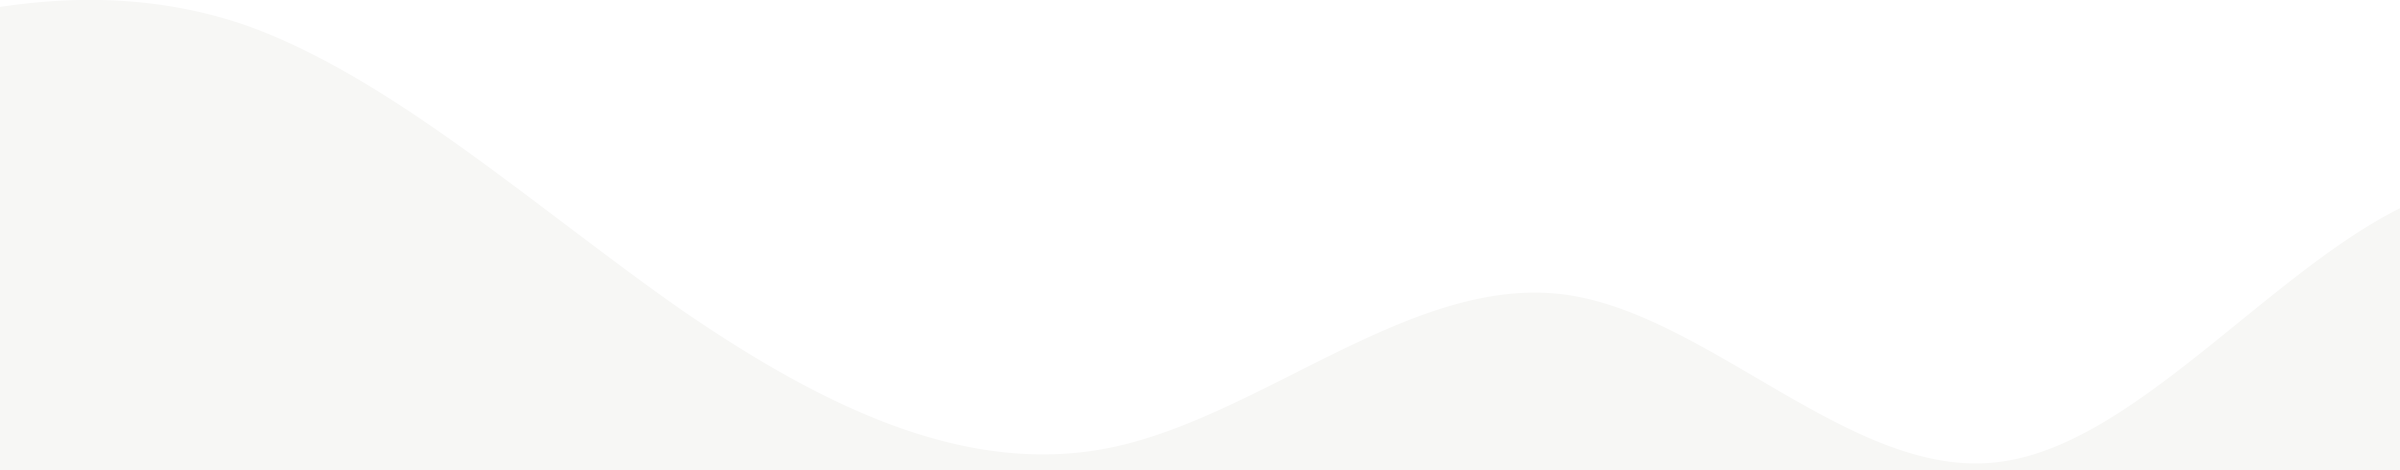 https://intellimedianetworks.com/wp-content/uploads/2020/08/Wave_White_bottom_left_shape_01.png